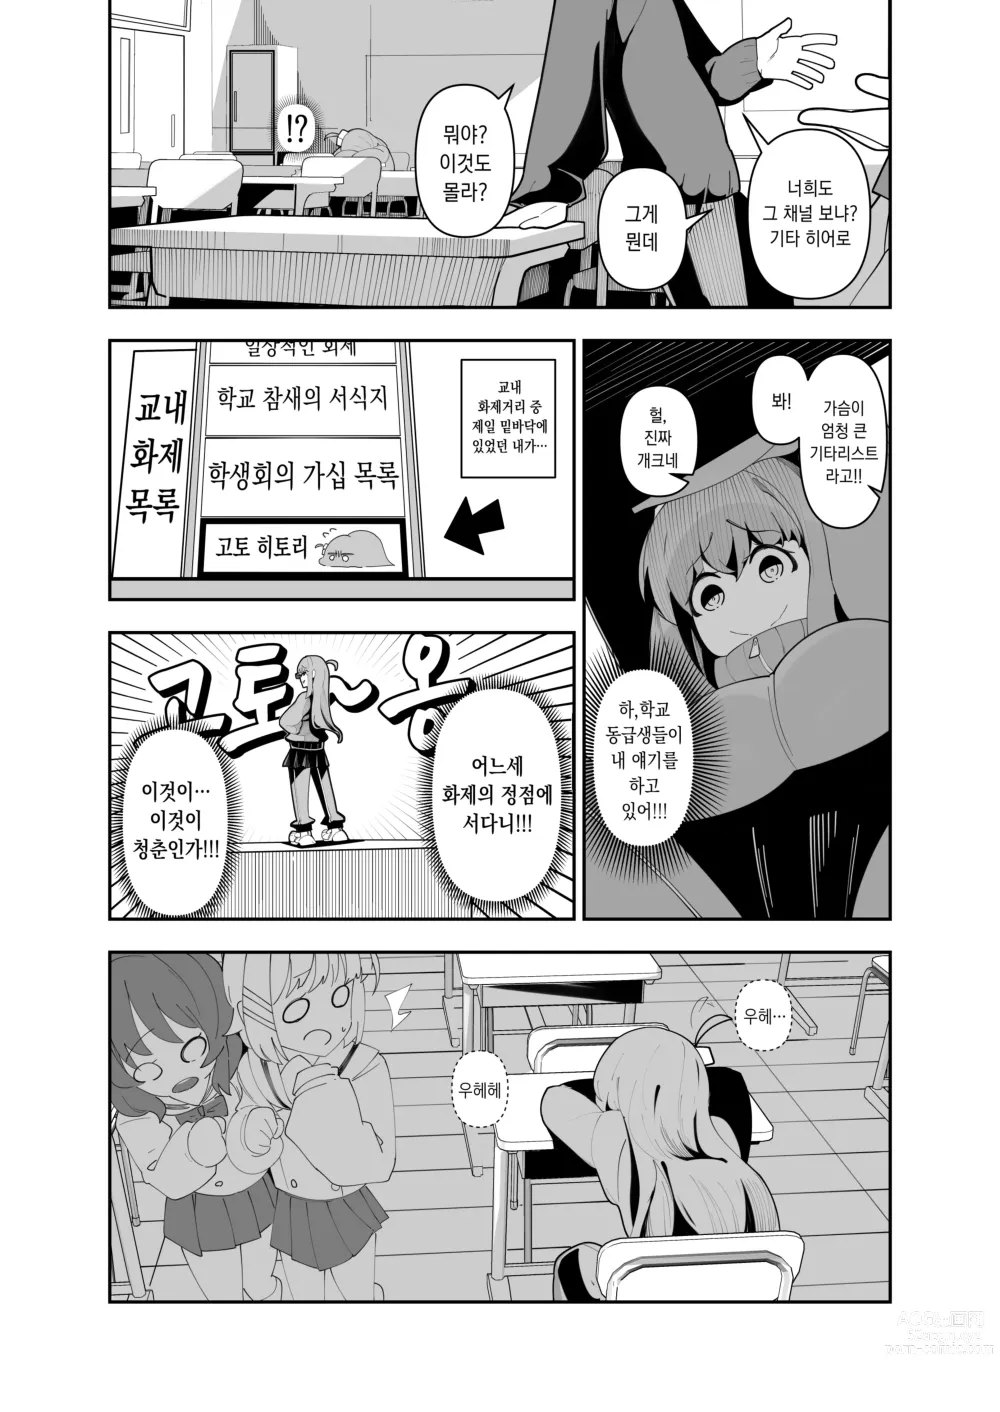 Page 6 of doujinshi 트래픽 히어로!